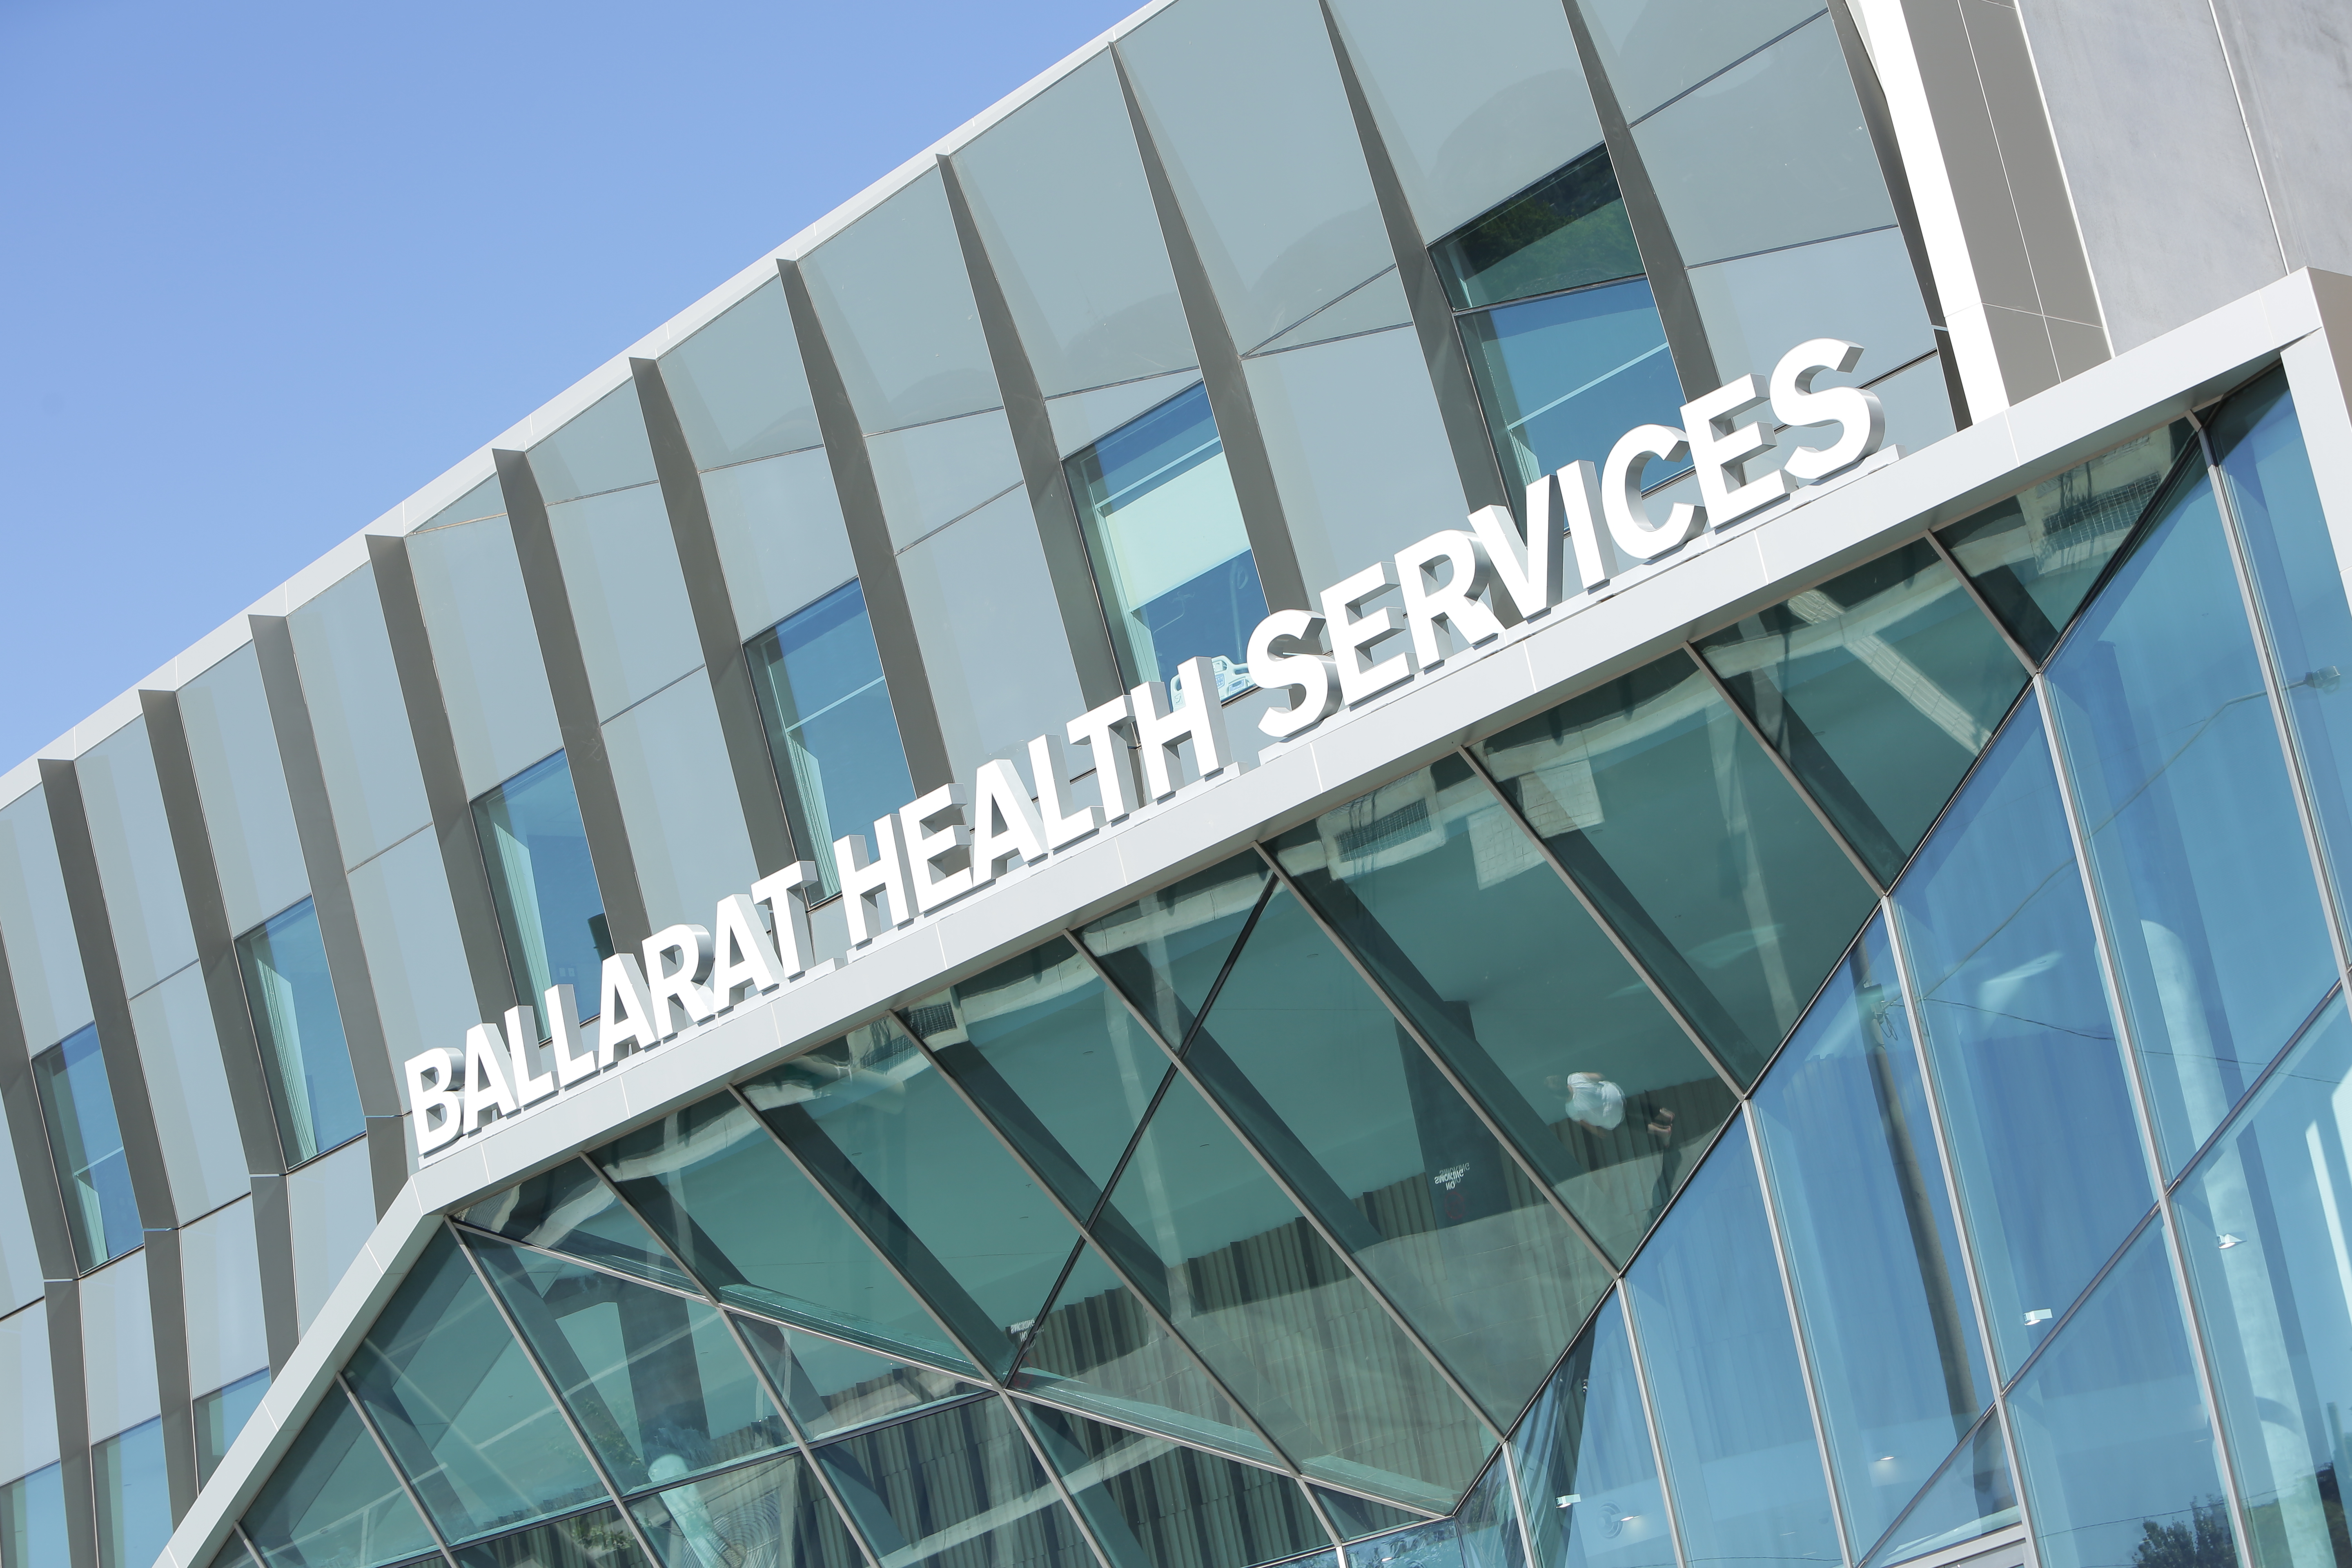 Working at Grampians Health Ballarat